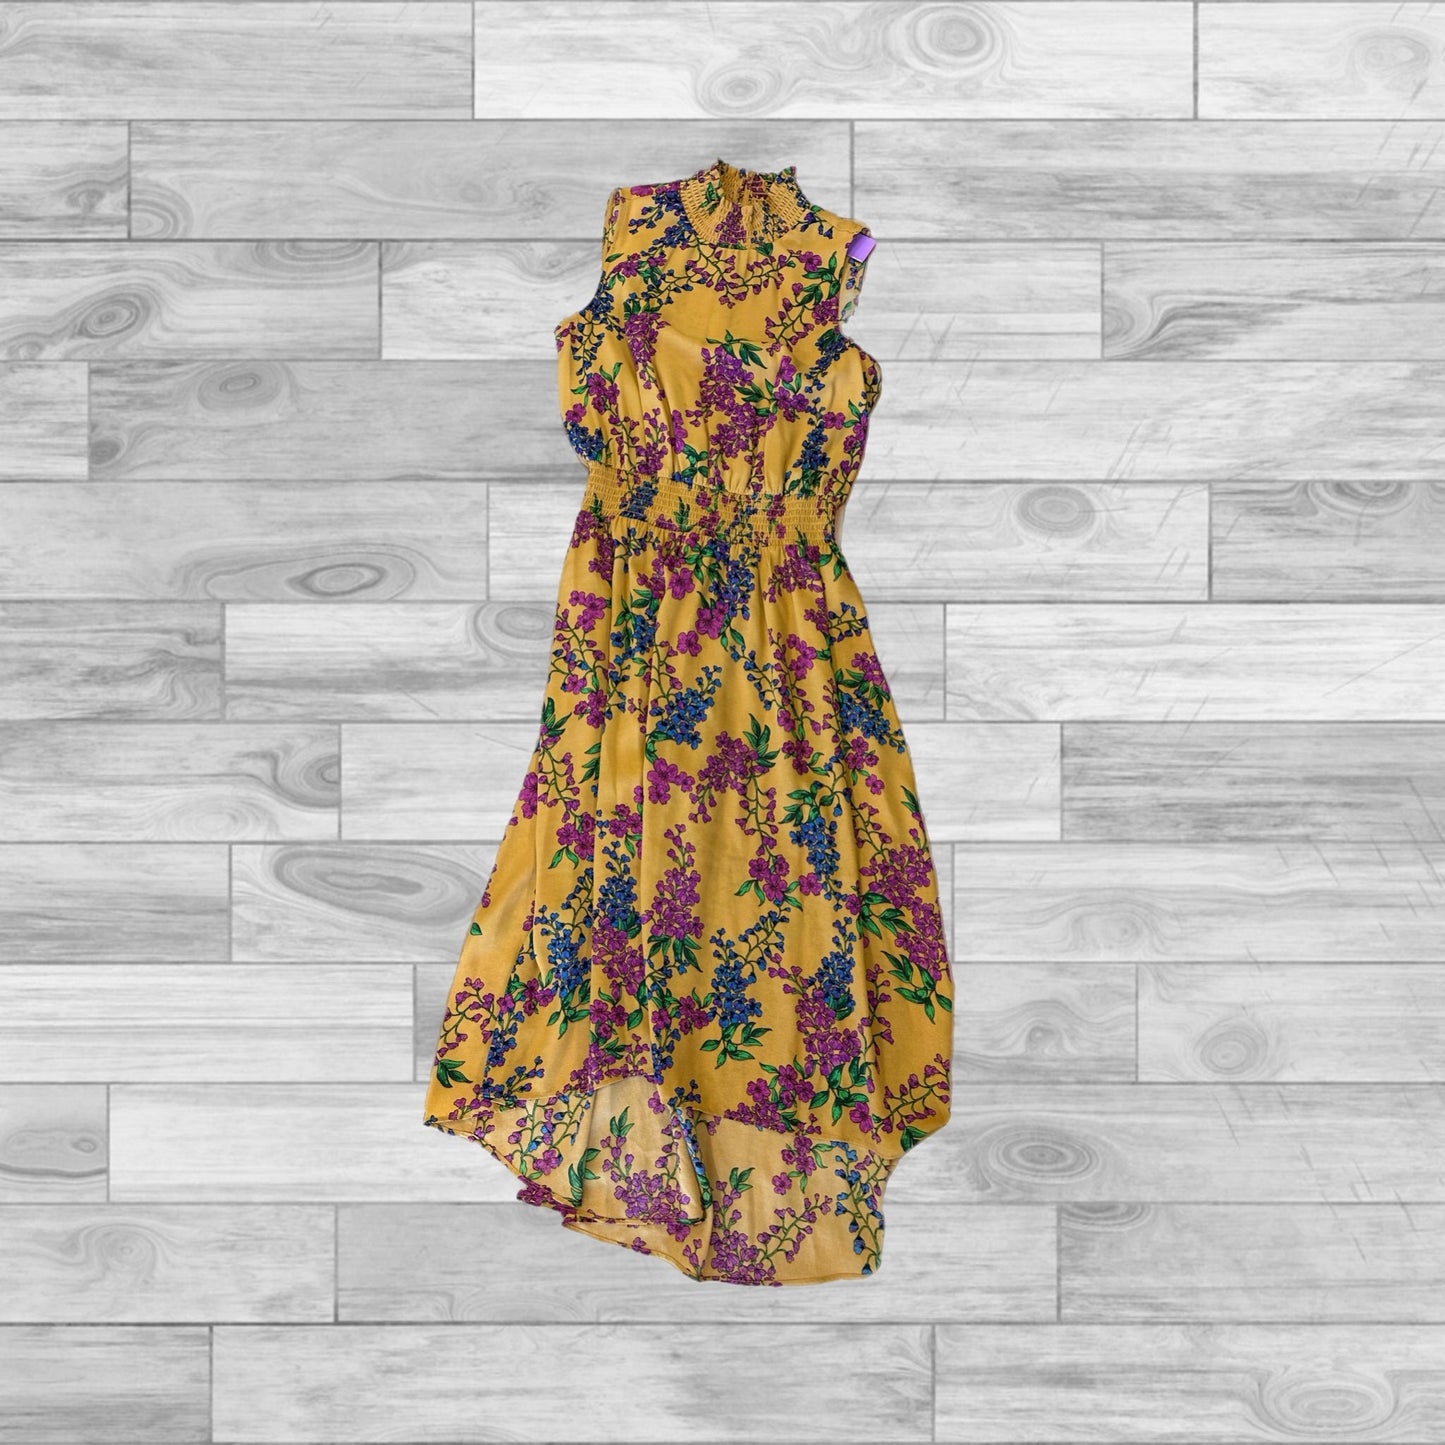 Floral Print Dress Casual Maxi Nanette By Nanette Lepore, Size 8